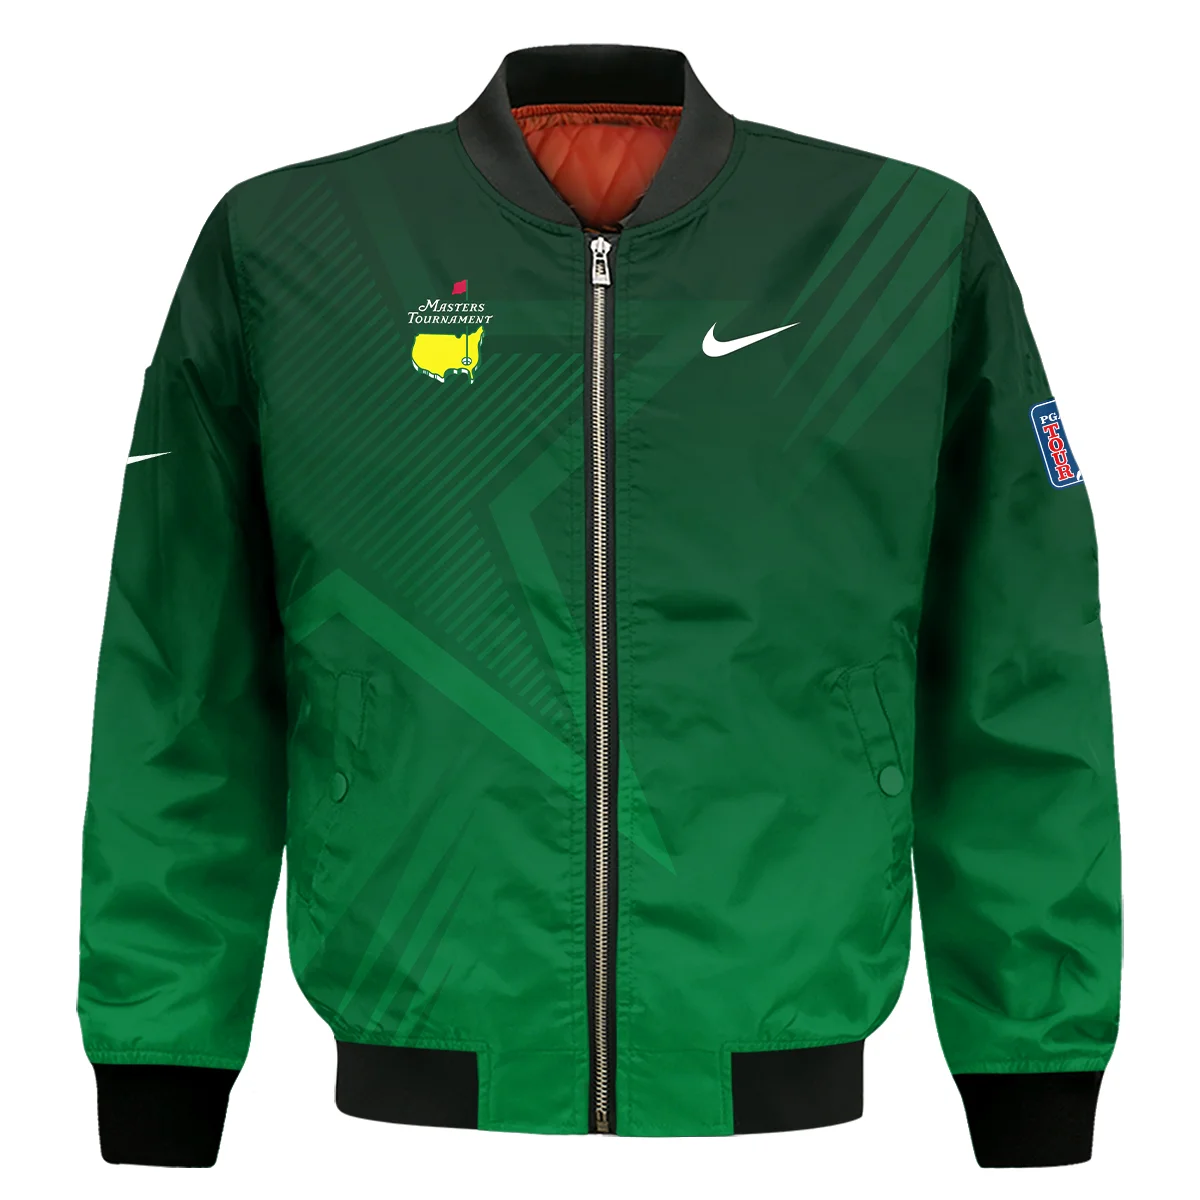 Nike Masters Tournament Polo Shirt Dark Green Gradient Star Pattern Golf Sports Bomber Jacket Style Classic Bomber Jacket